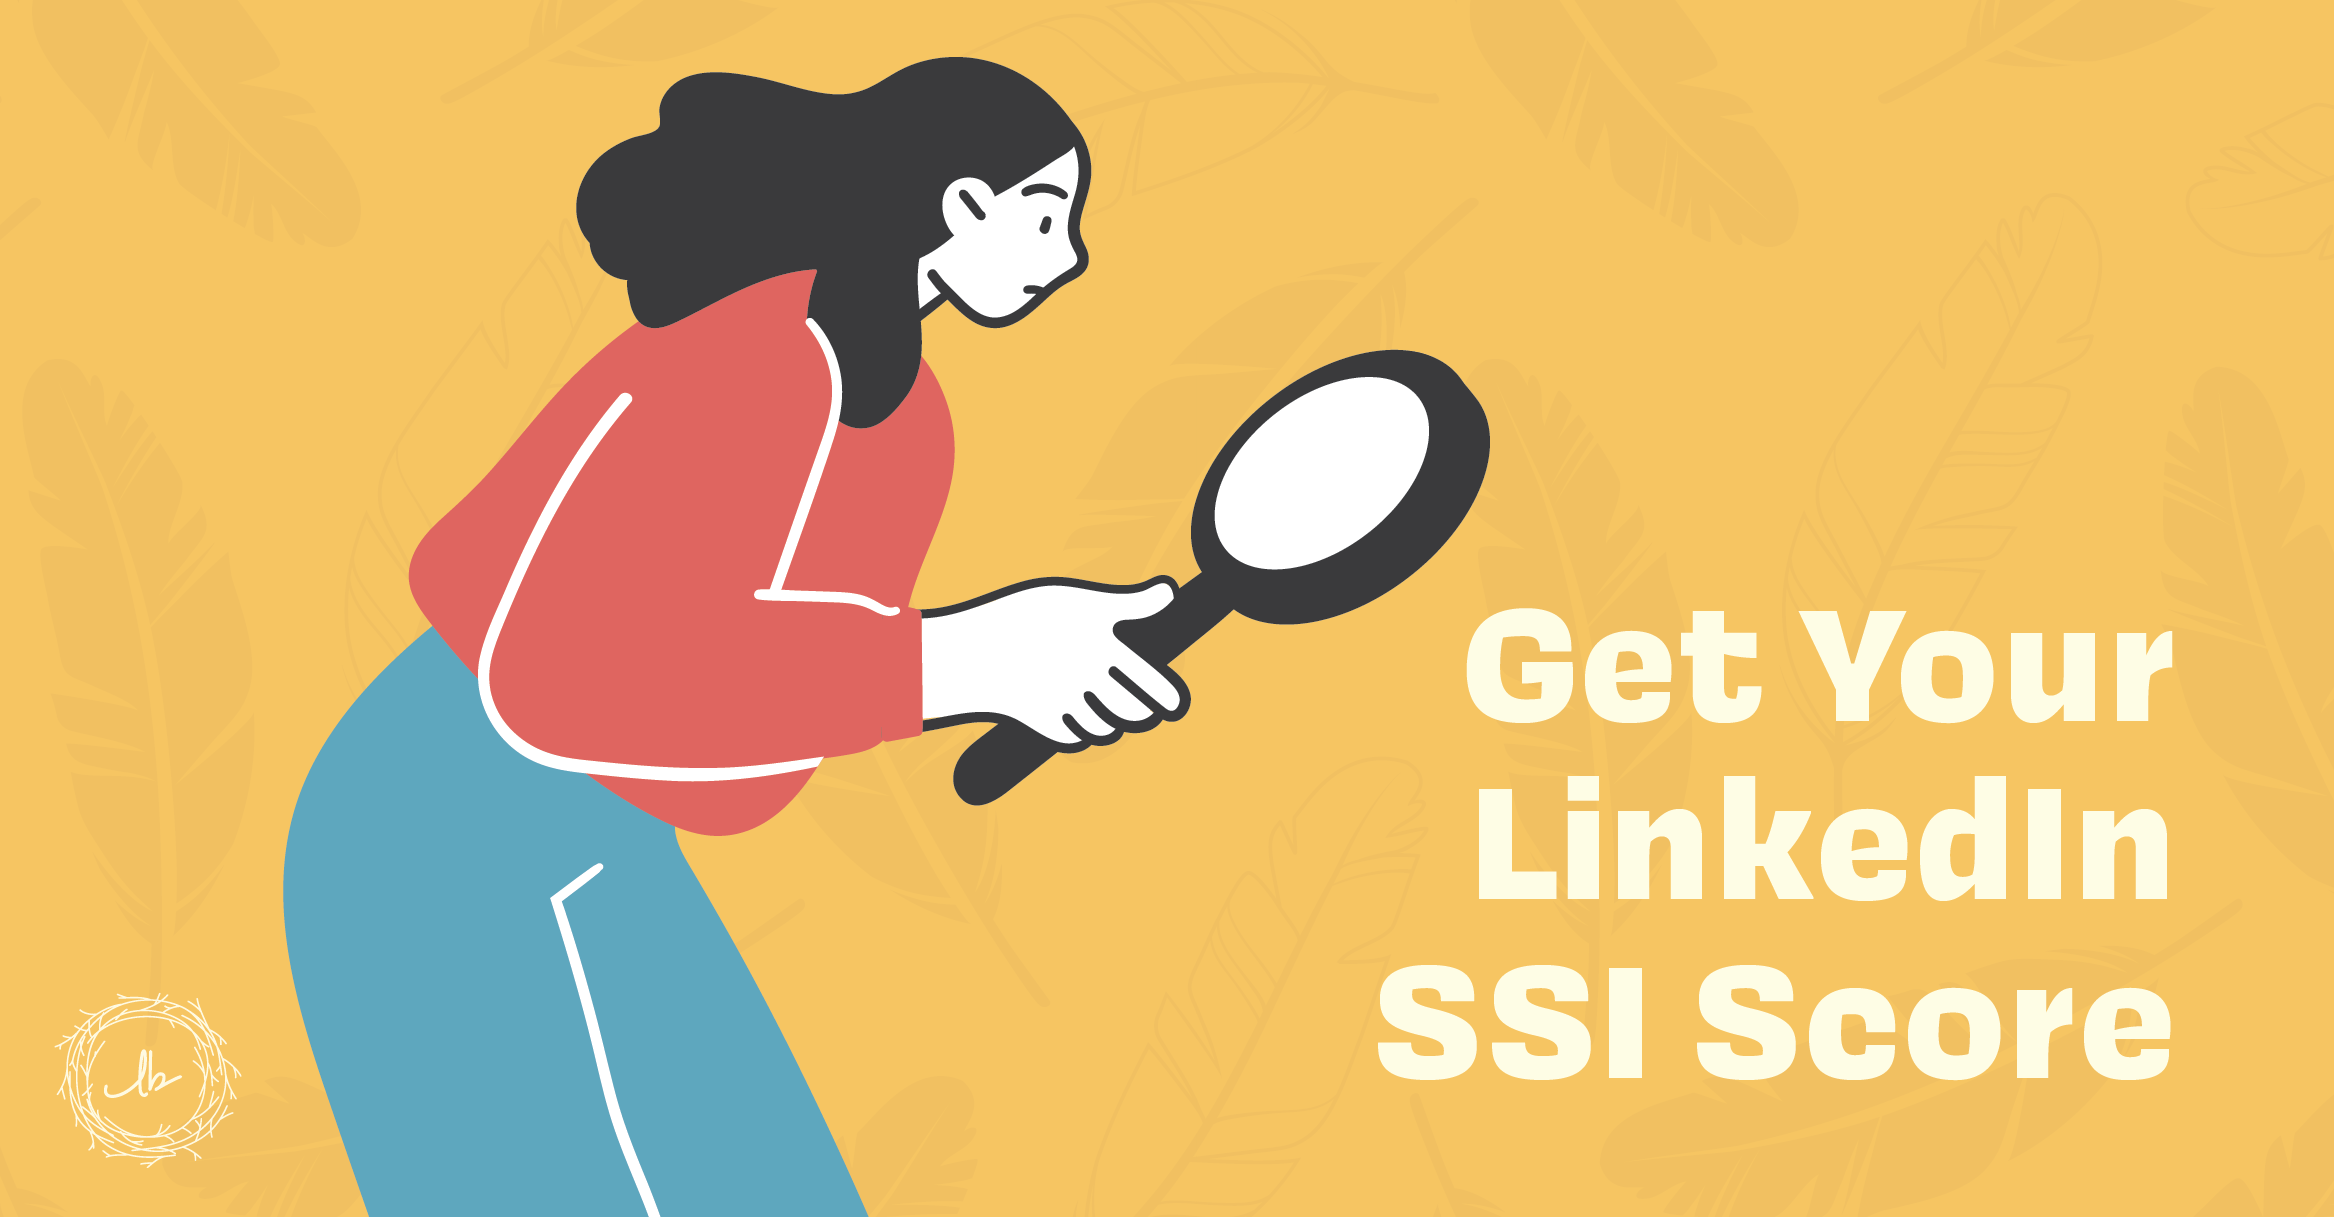 Get Your LinkedIn SSI Score